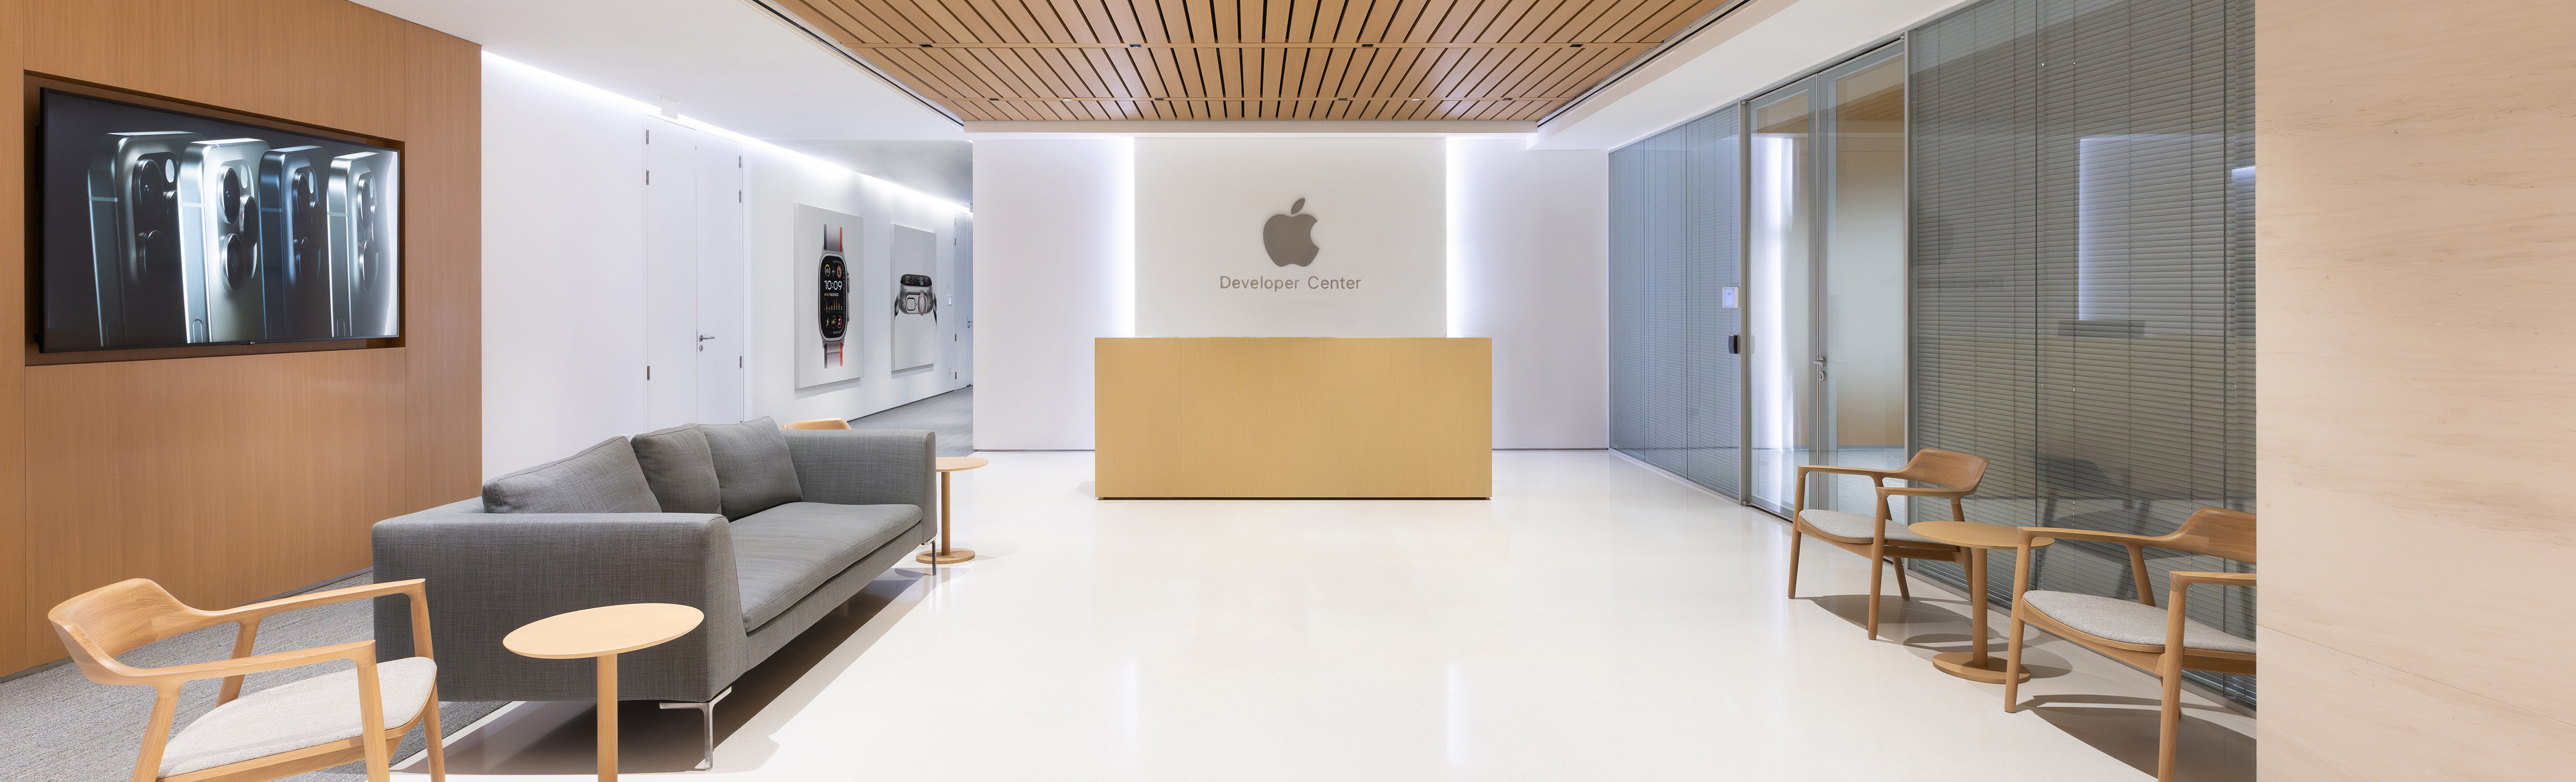 Apple Developer Center 的内部：一个敞亮的房间，有一张灰色沙发、几把木椅，以及位于大型 Apple 标志下方的接待台。